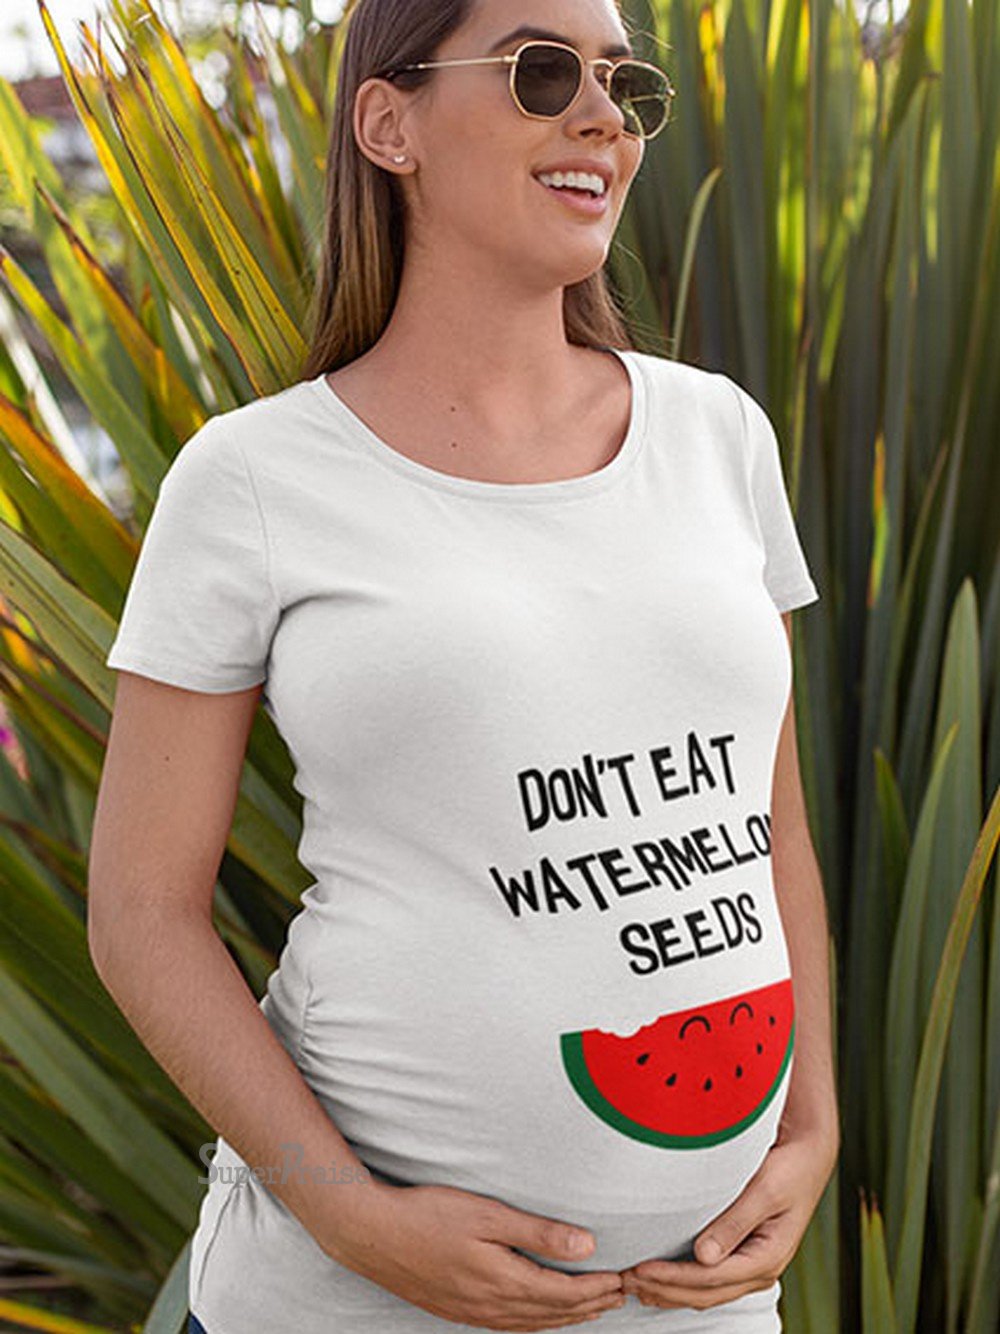 Don't Eat Watermelon Seeds Pregnancy T Shirt